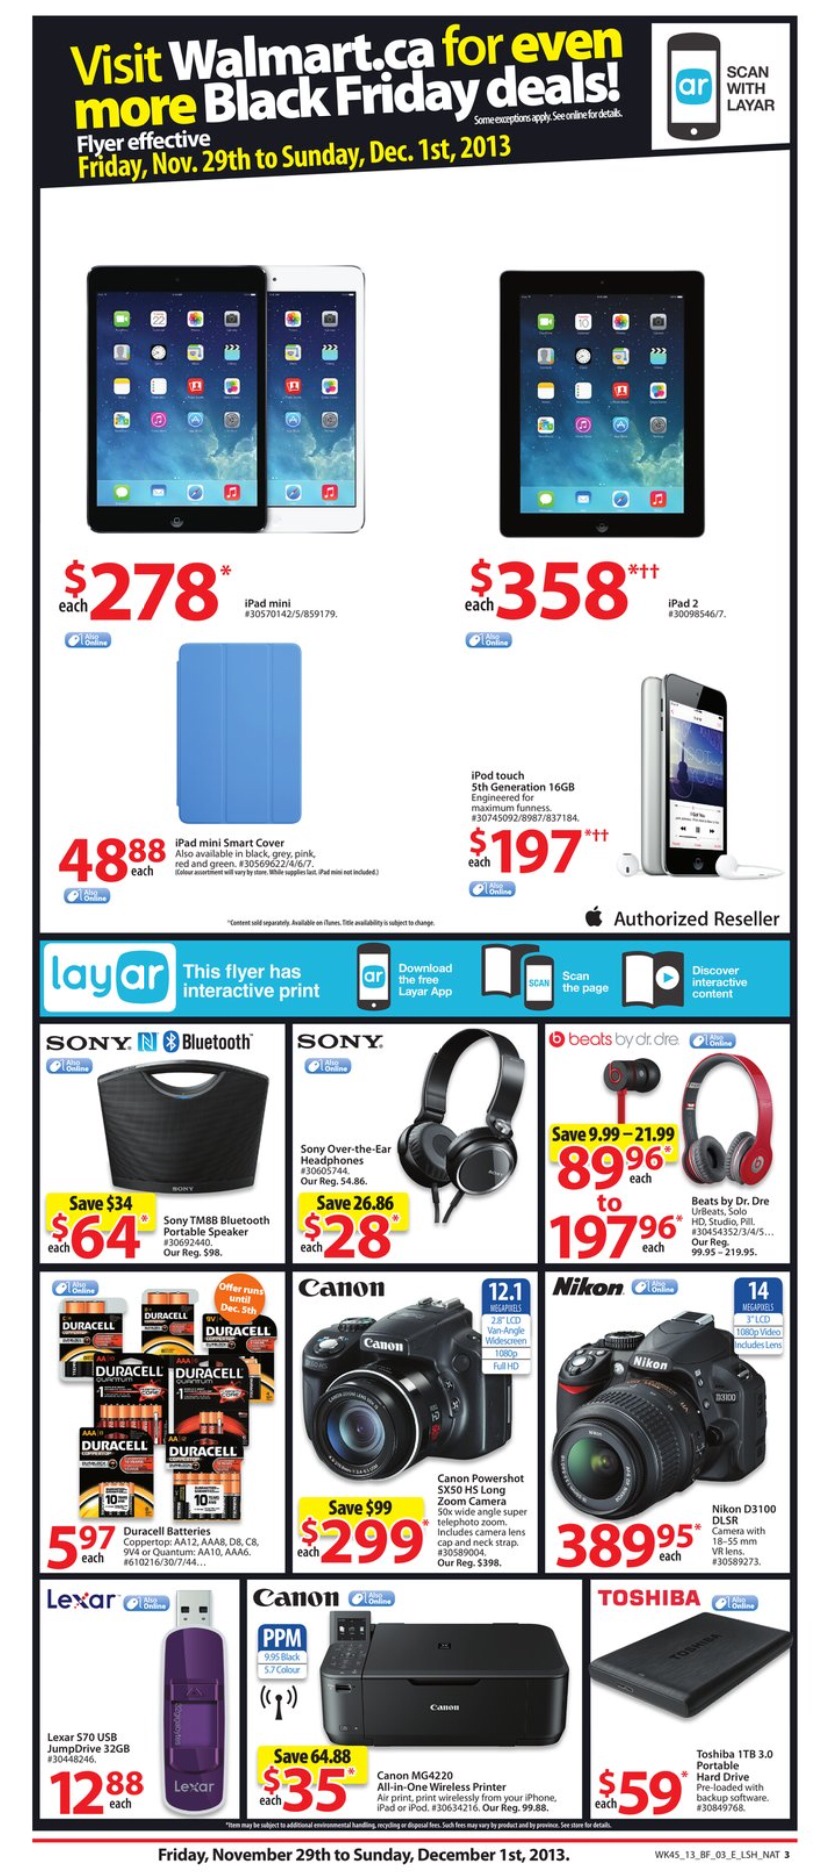 WalMart Canada Black Friday 2013 Sales and Deals Flyer › Black Friday Canada